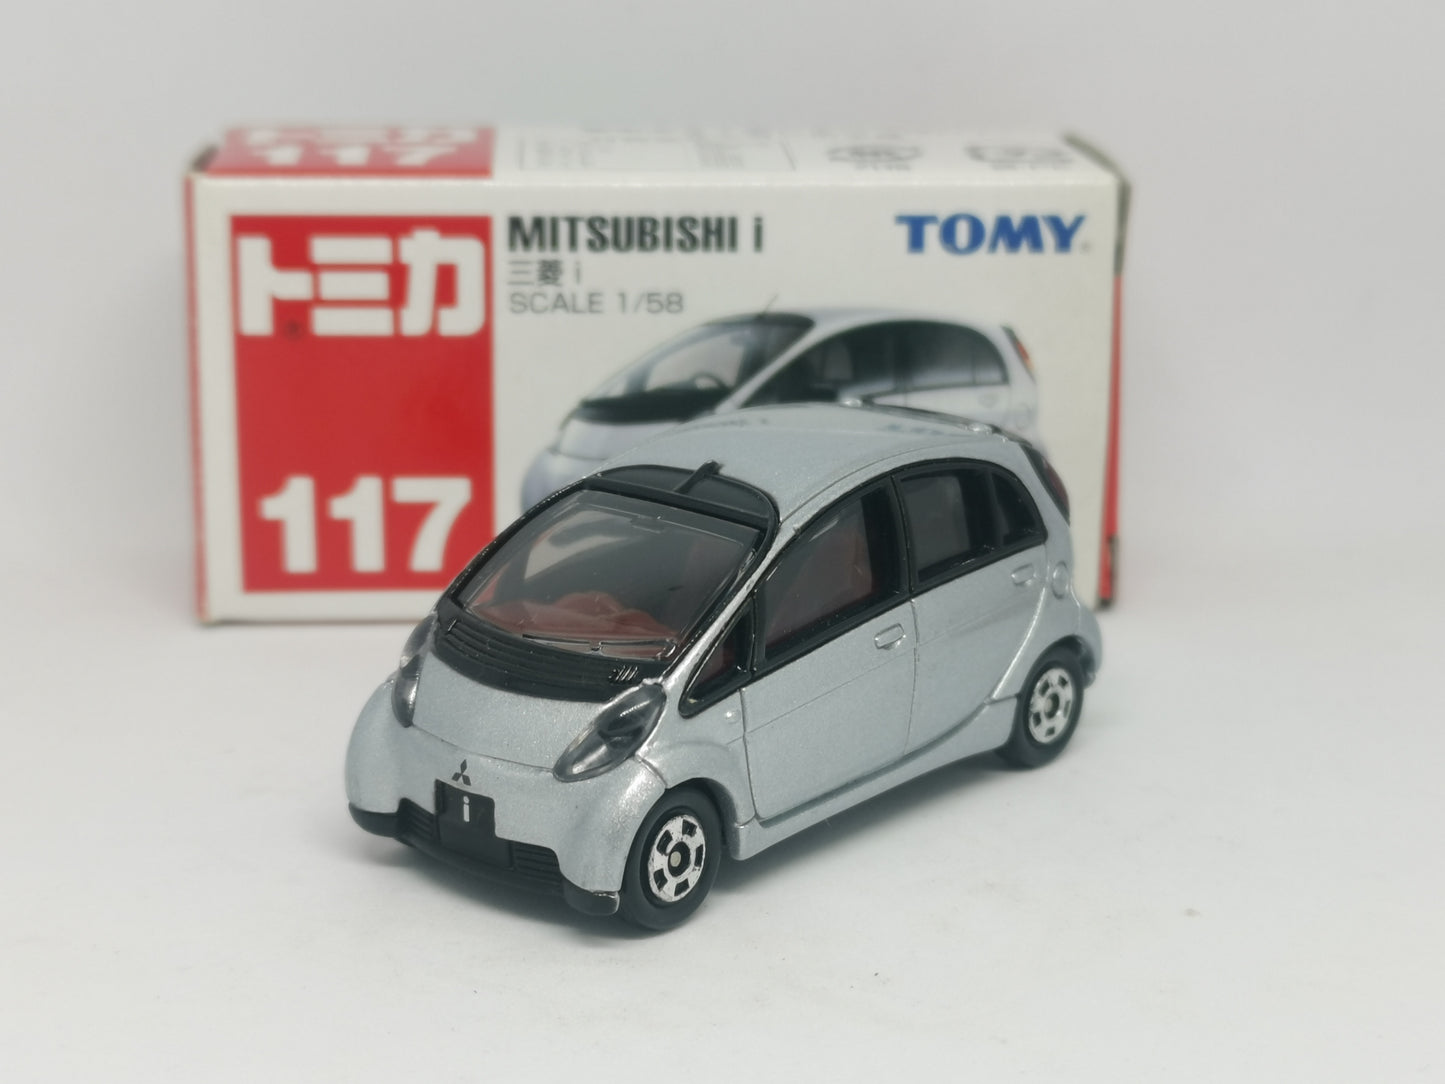 Tomica #117 Mitsubishi i